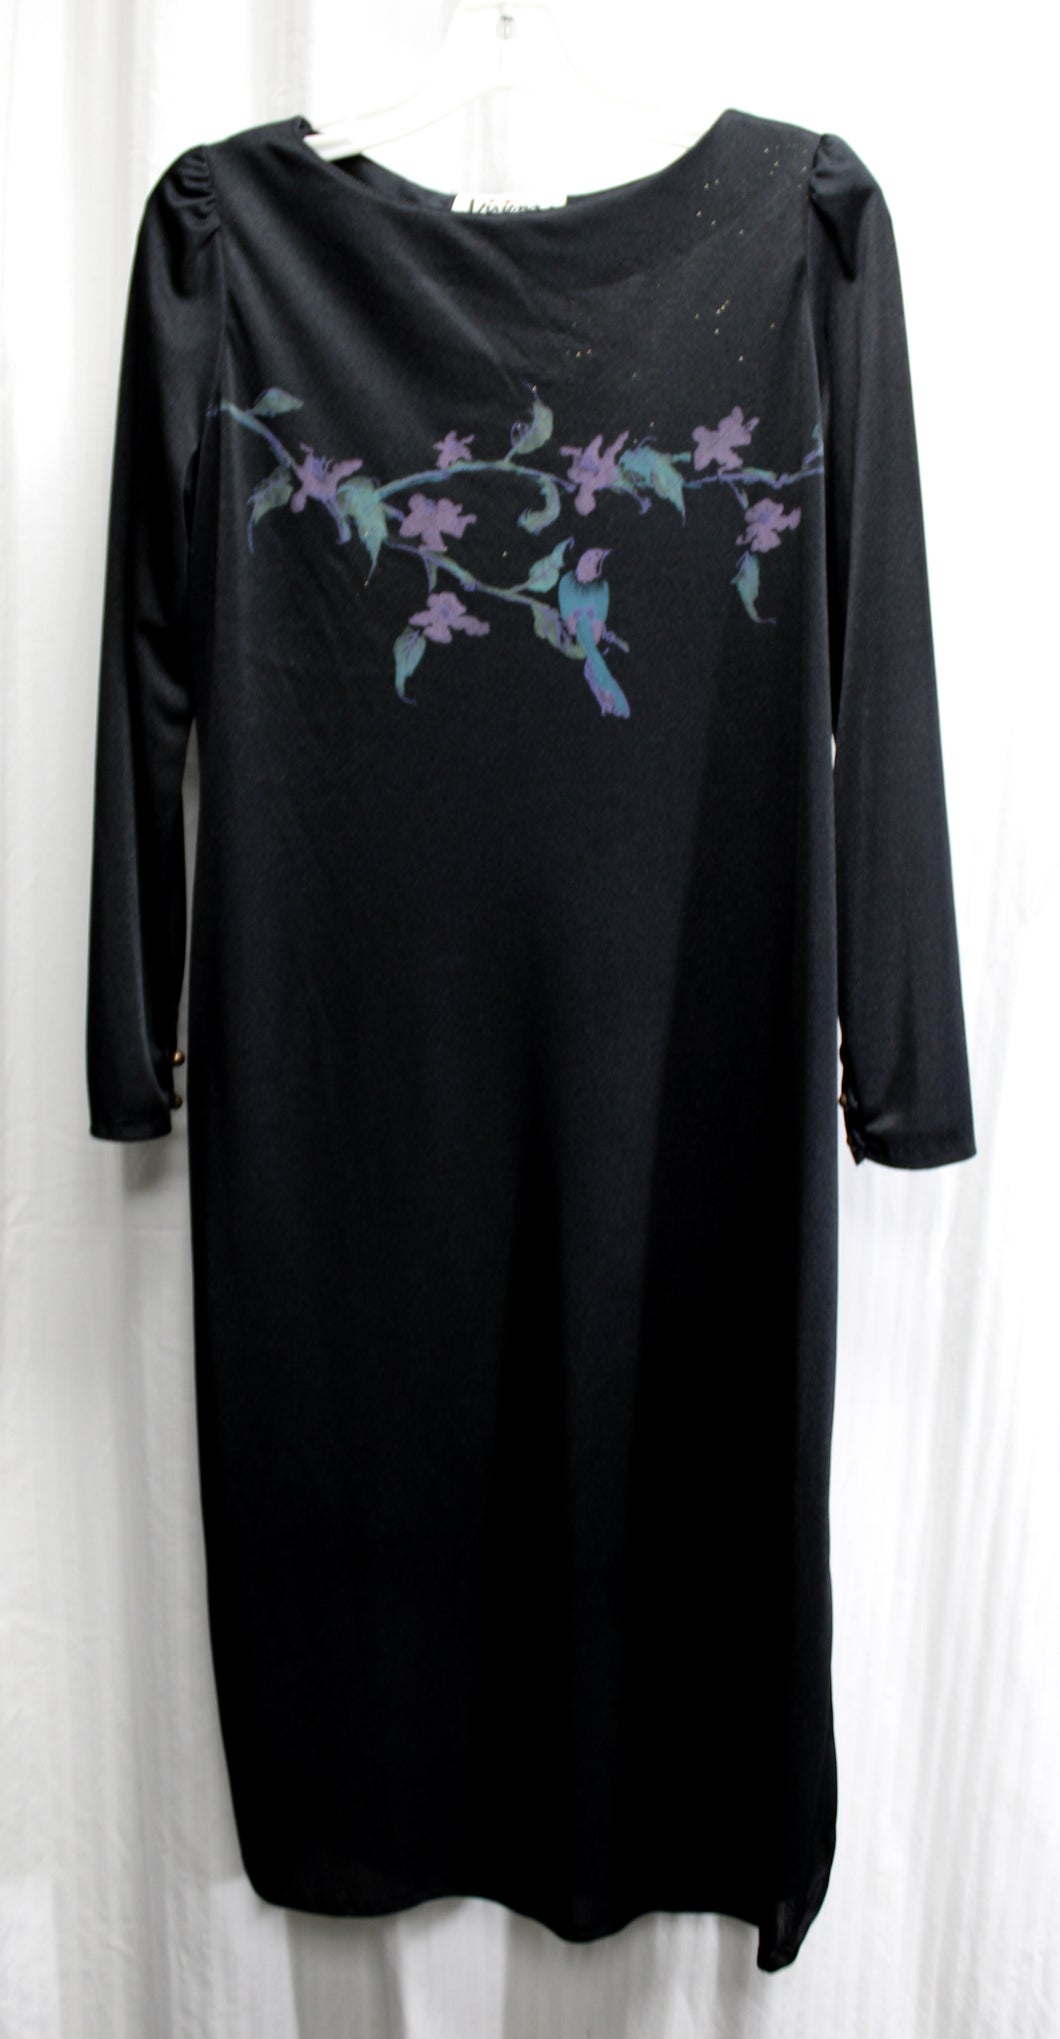 Vintage- California Visionz - Black Long Sleeve Sheath Slinky Dress w/ Bird & Floral Print on Chest - See Measurements 14